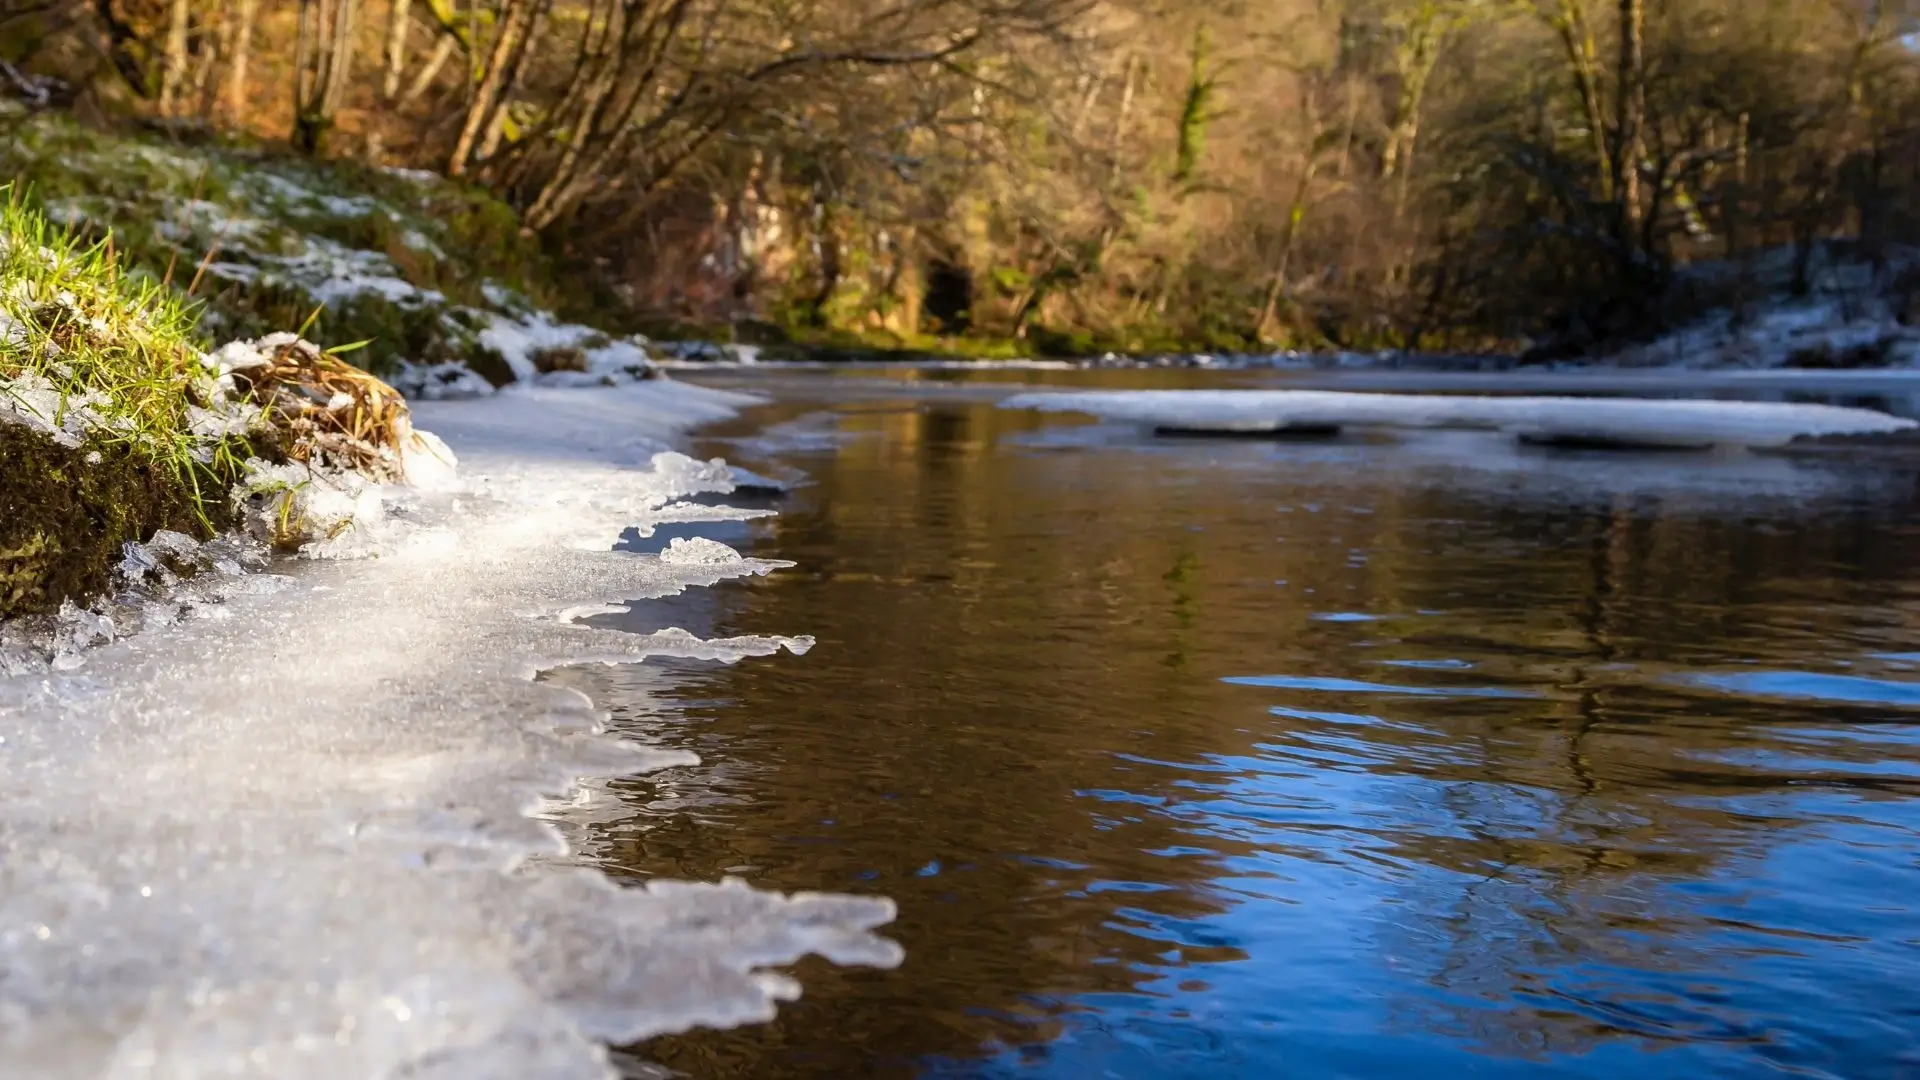 River slightly frozen along the banks.